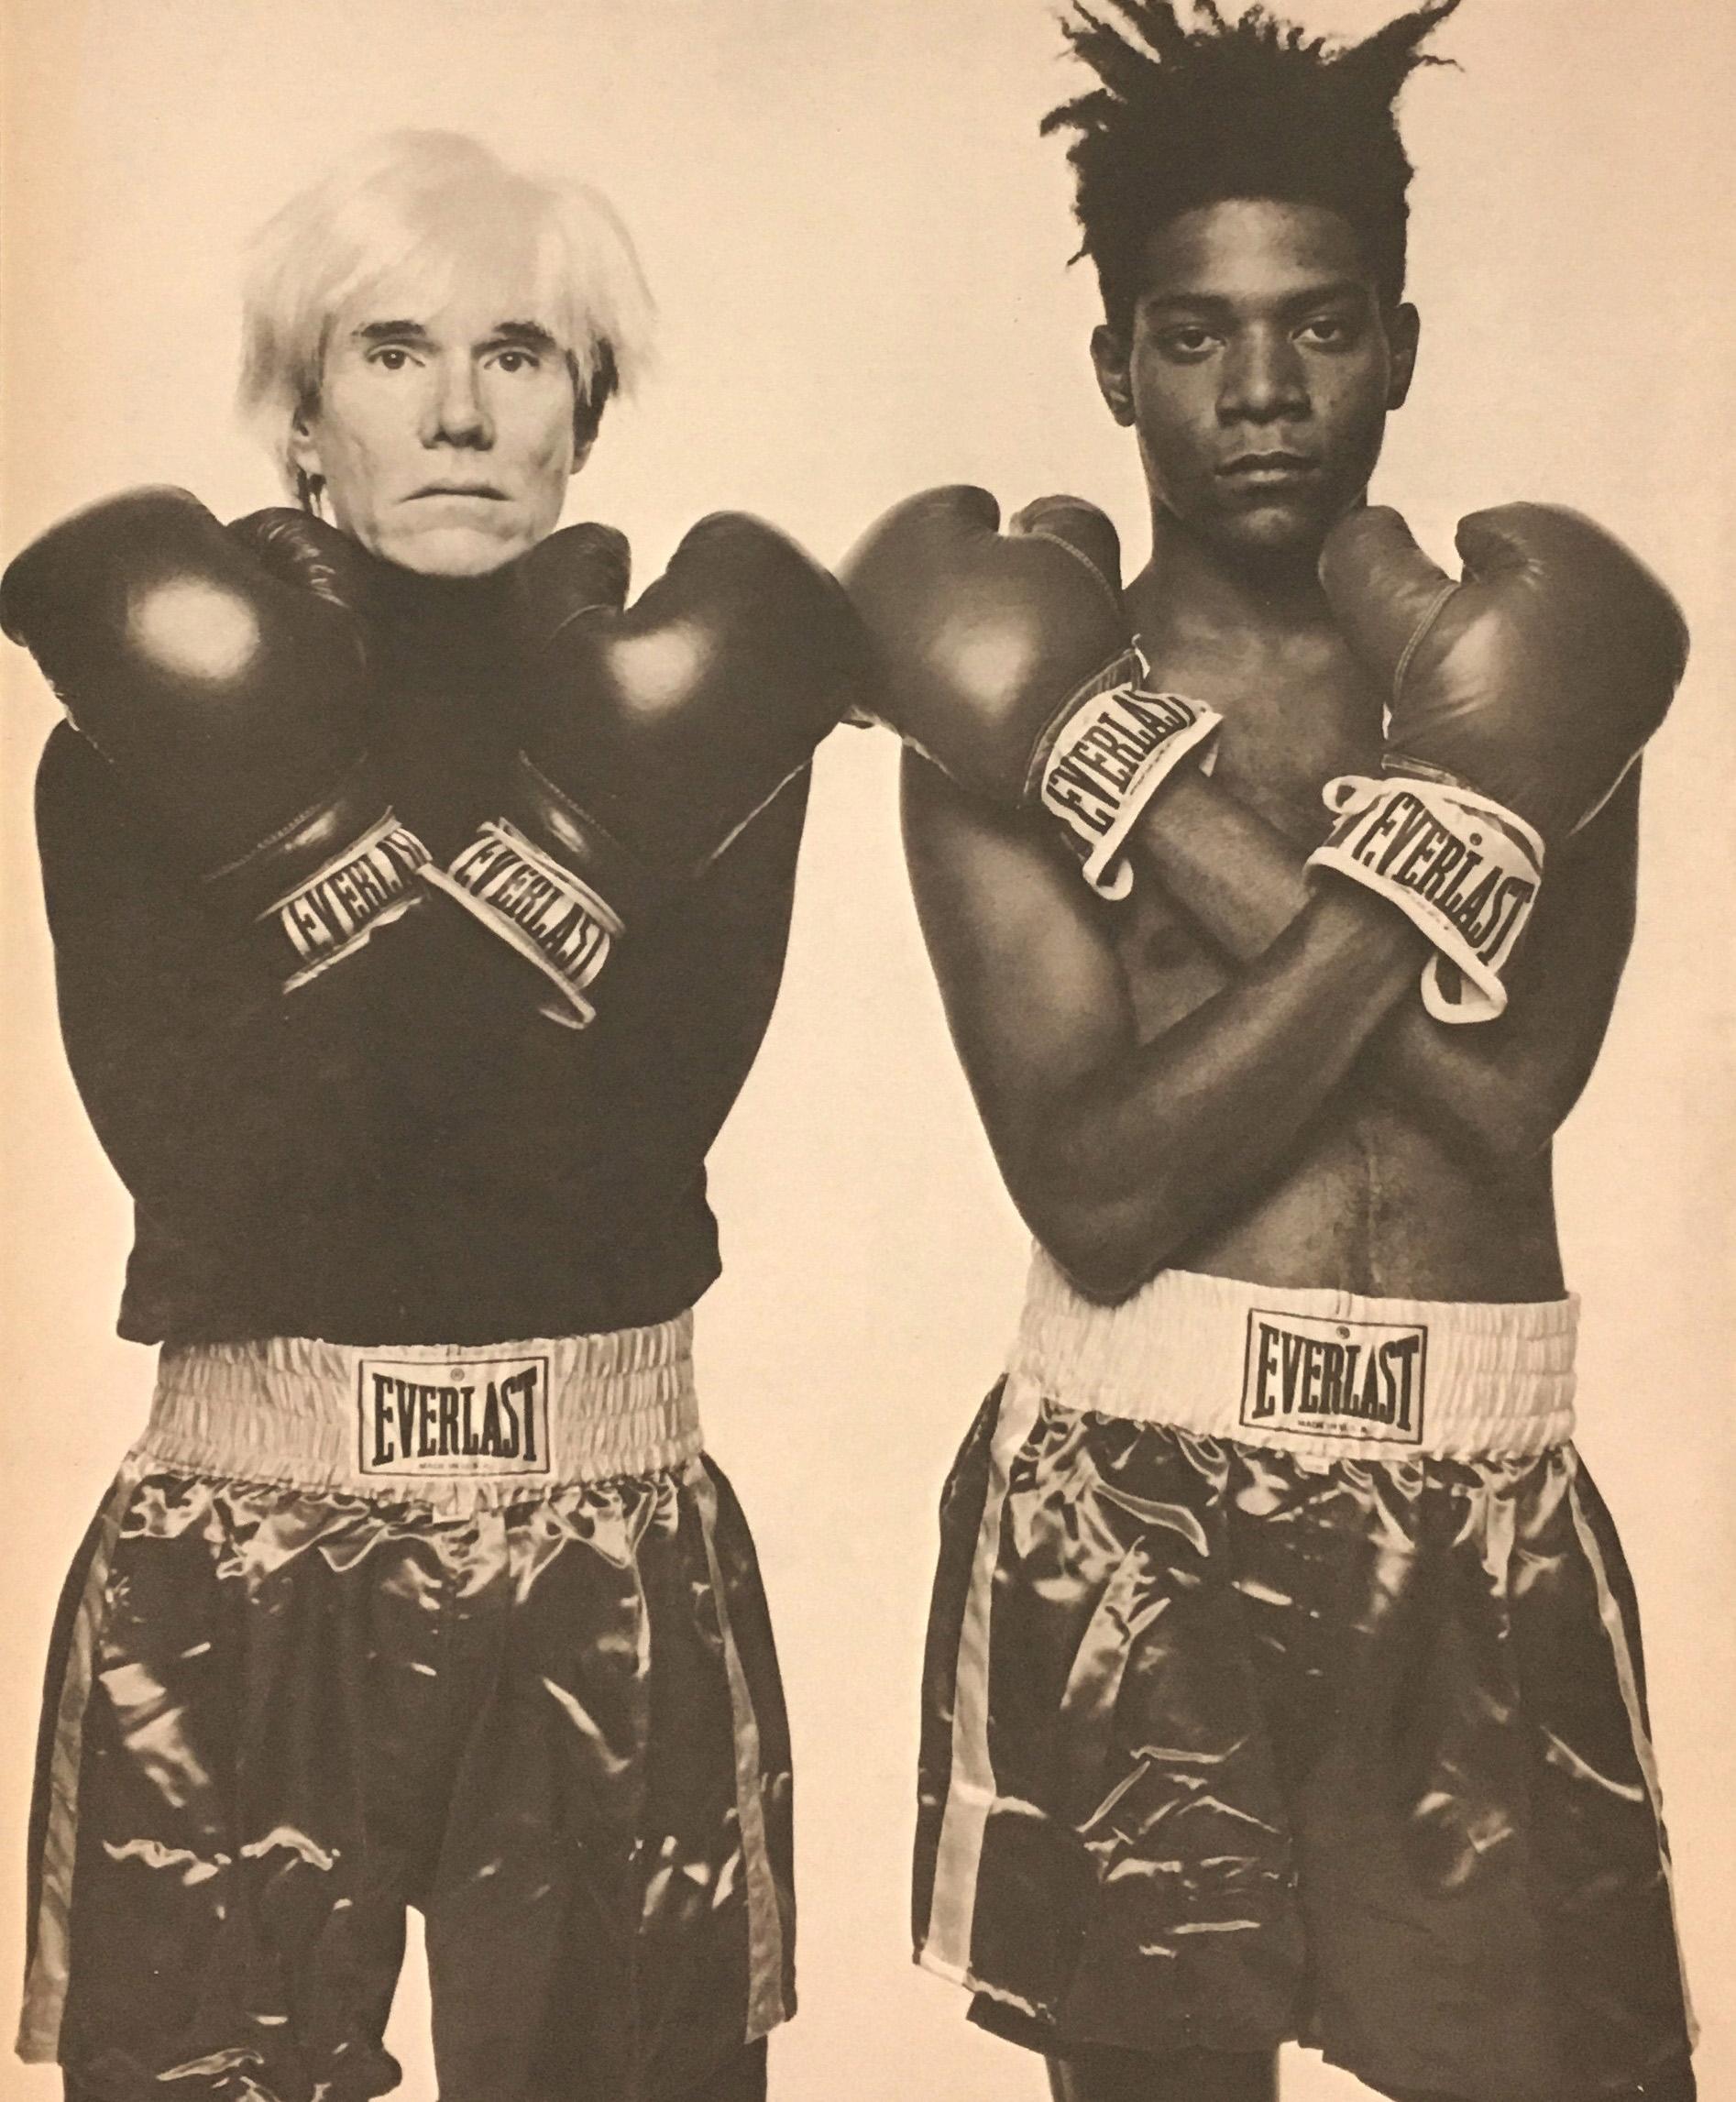 Warhol Basquiat Boxing-Werbung 1985 (Warhol Basquiat Boxing-Werbung 1985)  – Photograph von Michael Halsband